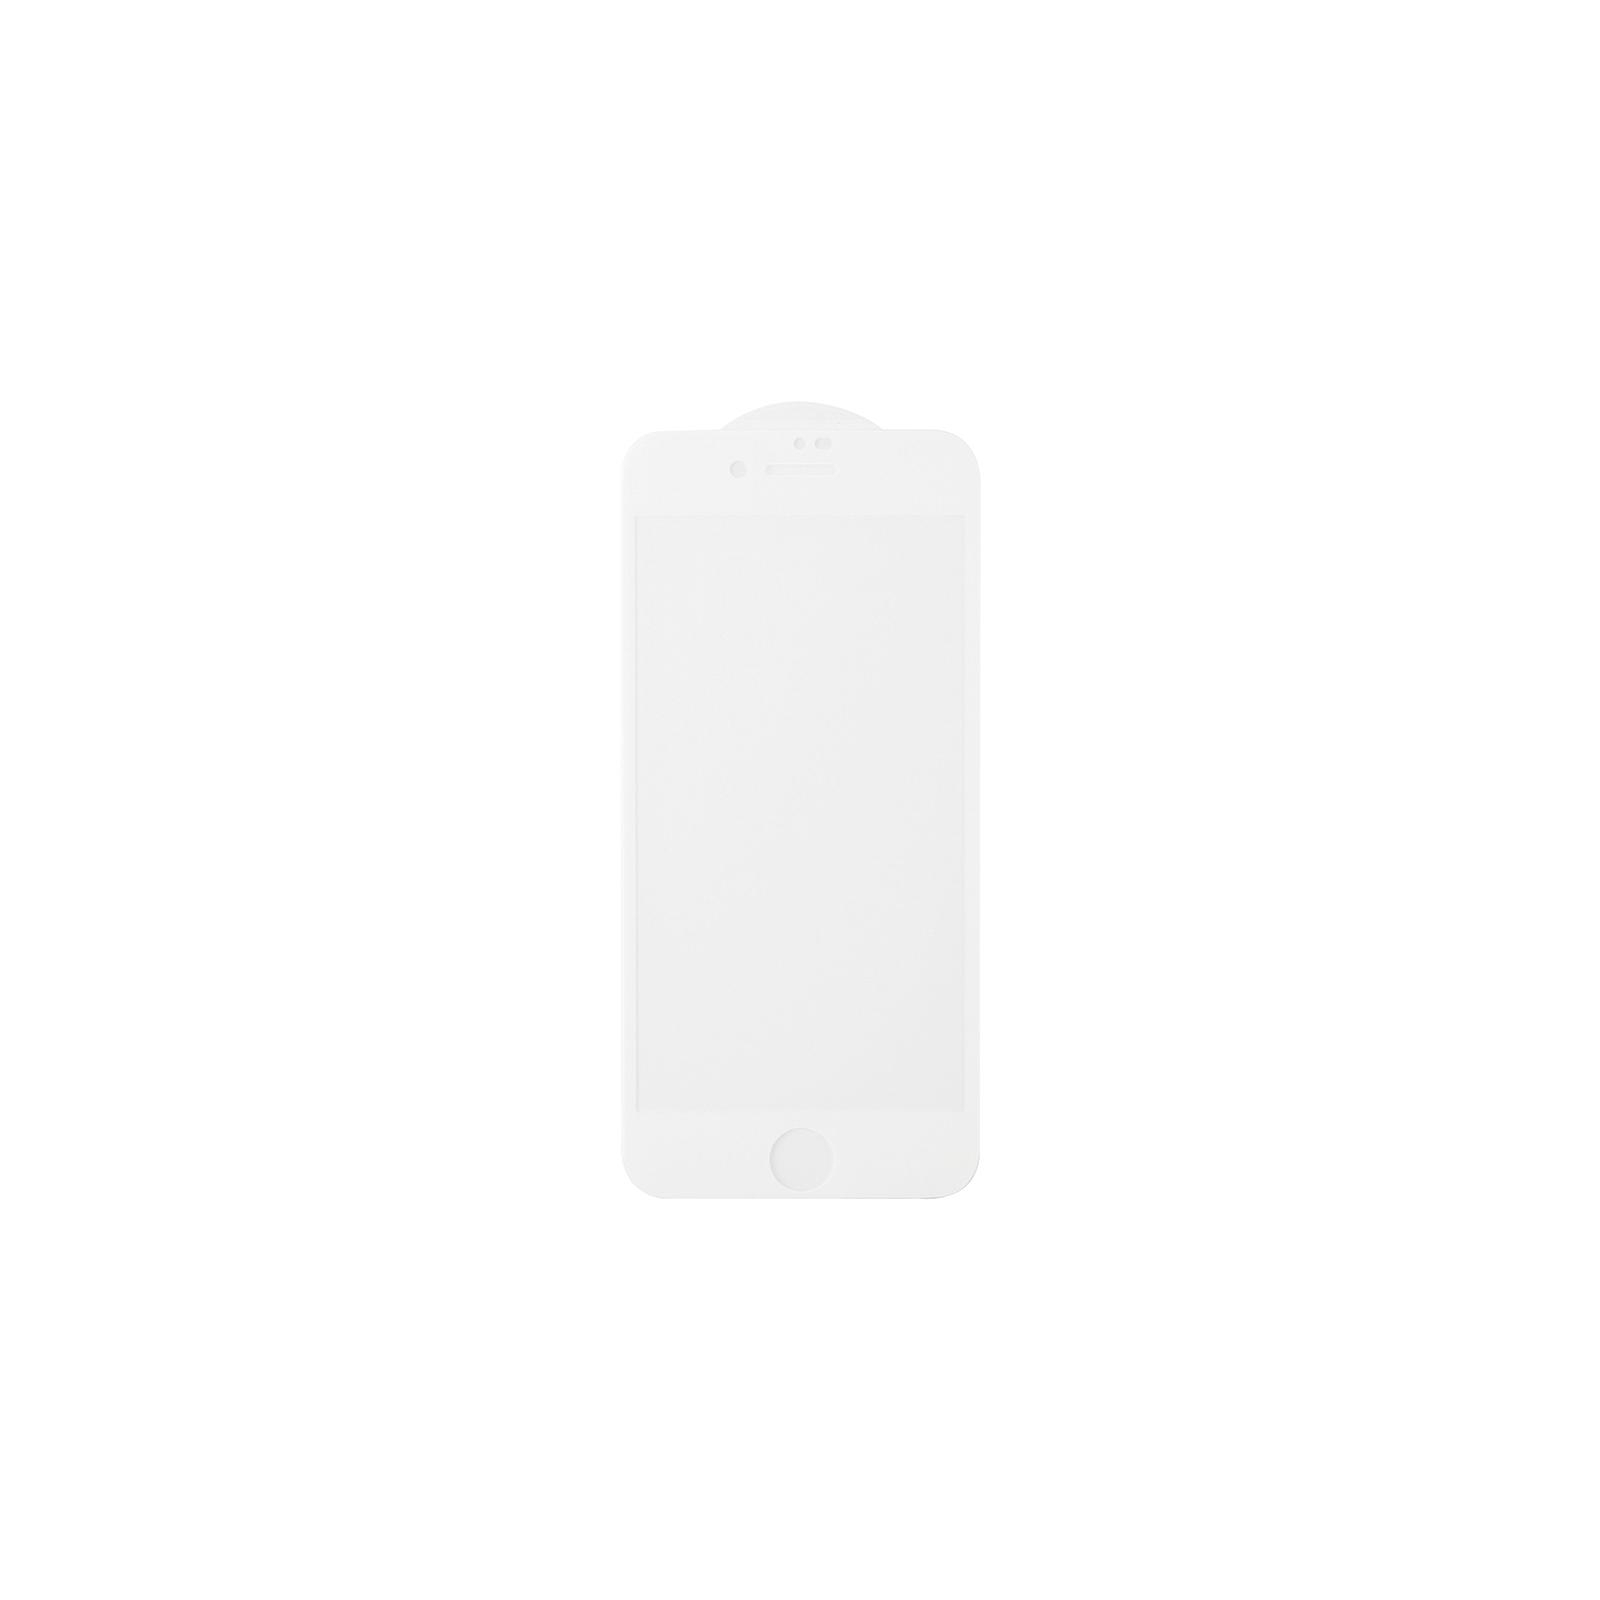 Стекло защитное Gelius Pro 5D Clear Glass for iPhone 7/8 White (00000070943) изображение 2